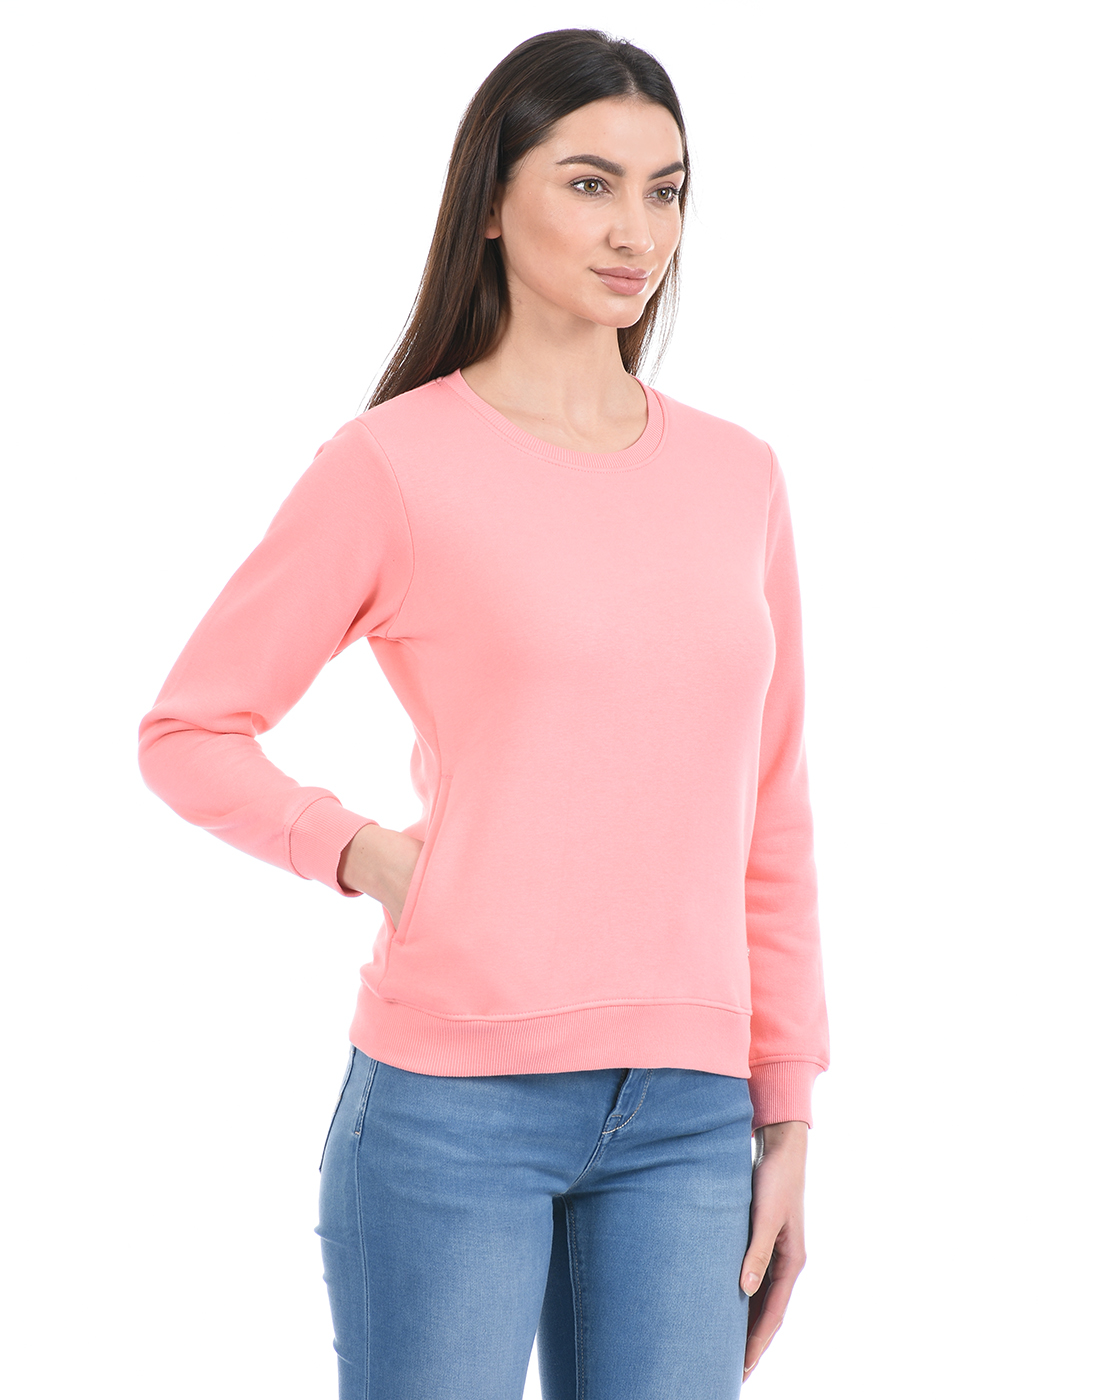 Cloak & Decker by Monte Carlo Women Pink Sweat Shirt